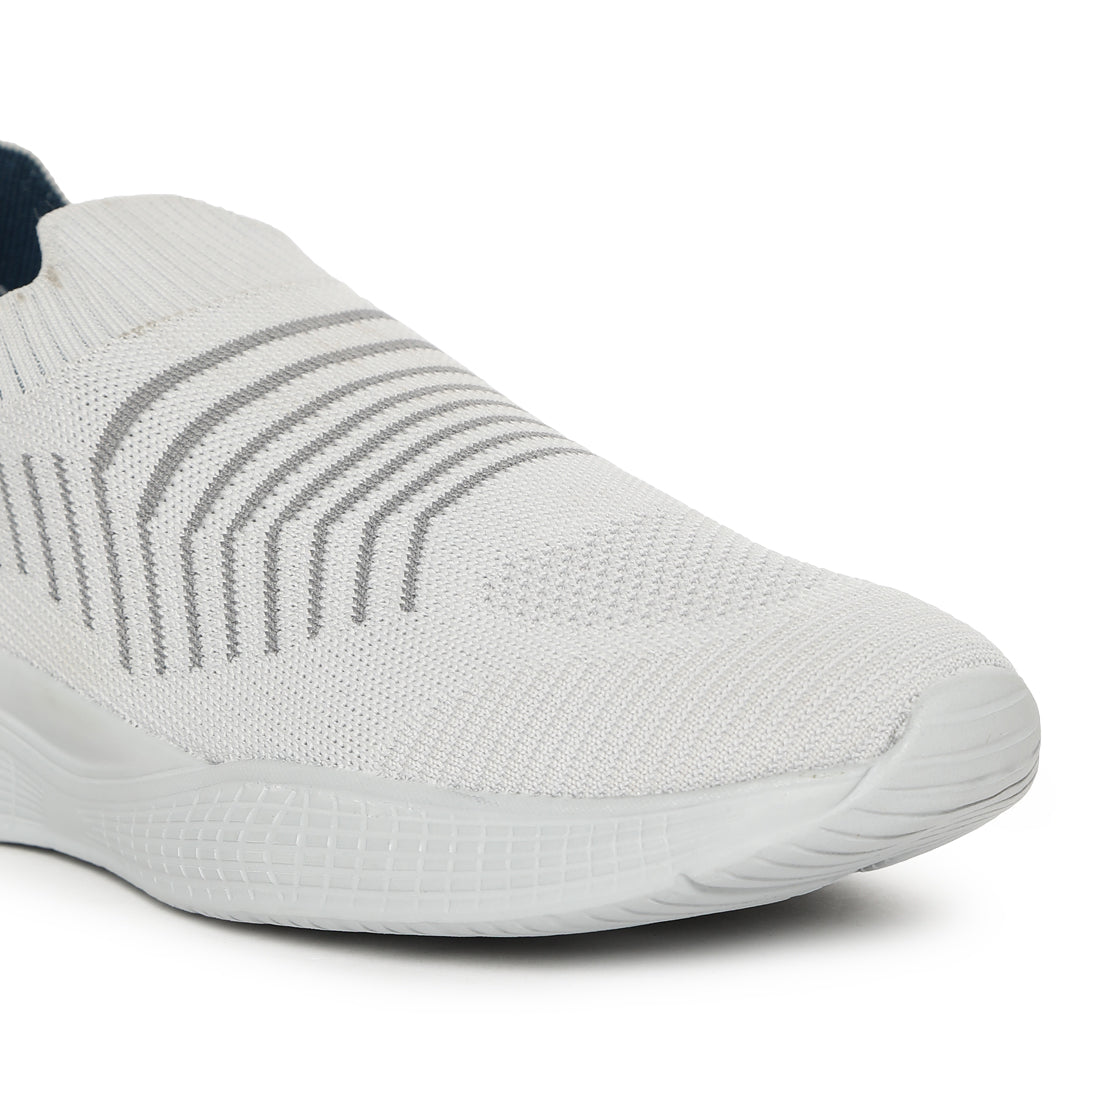 Eeken Light Grey - Teal Blue Athleisure Shoes for Men